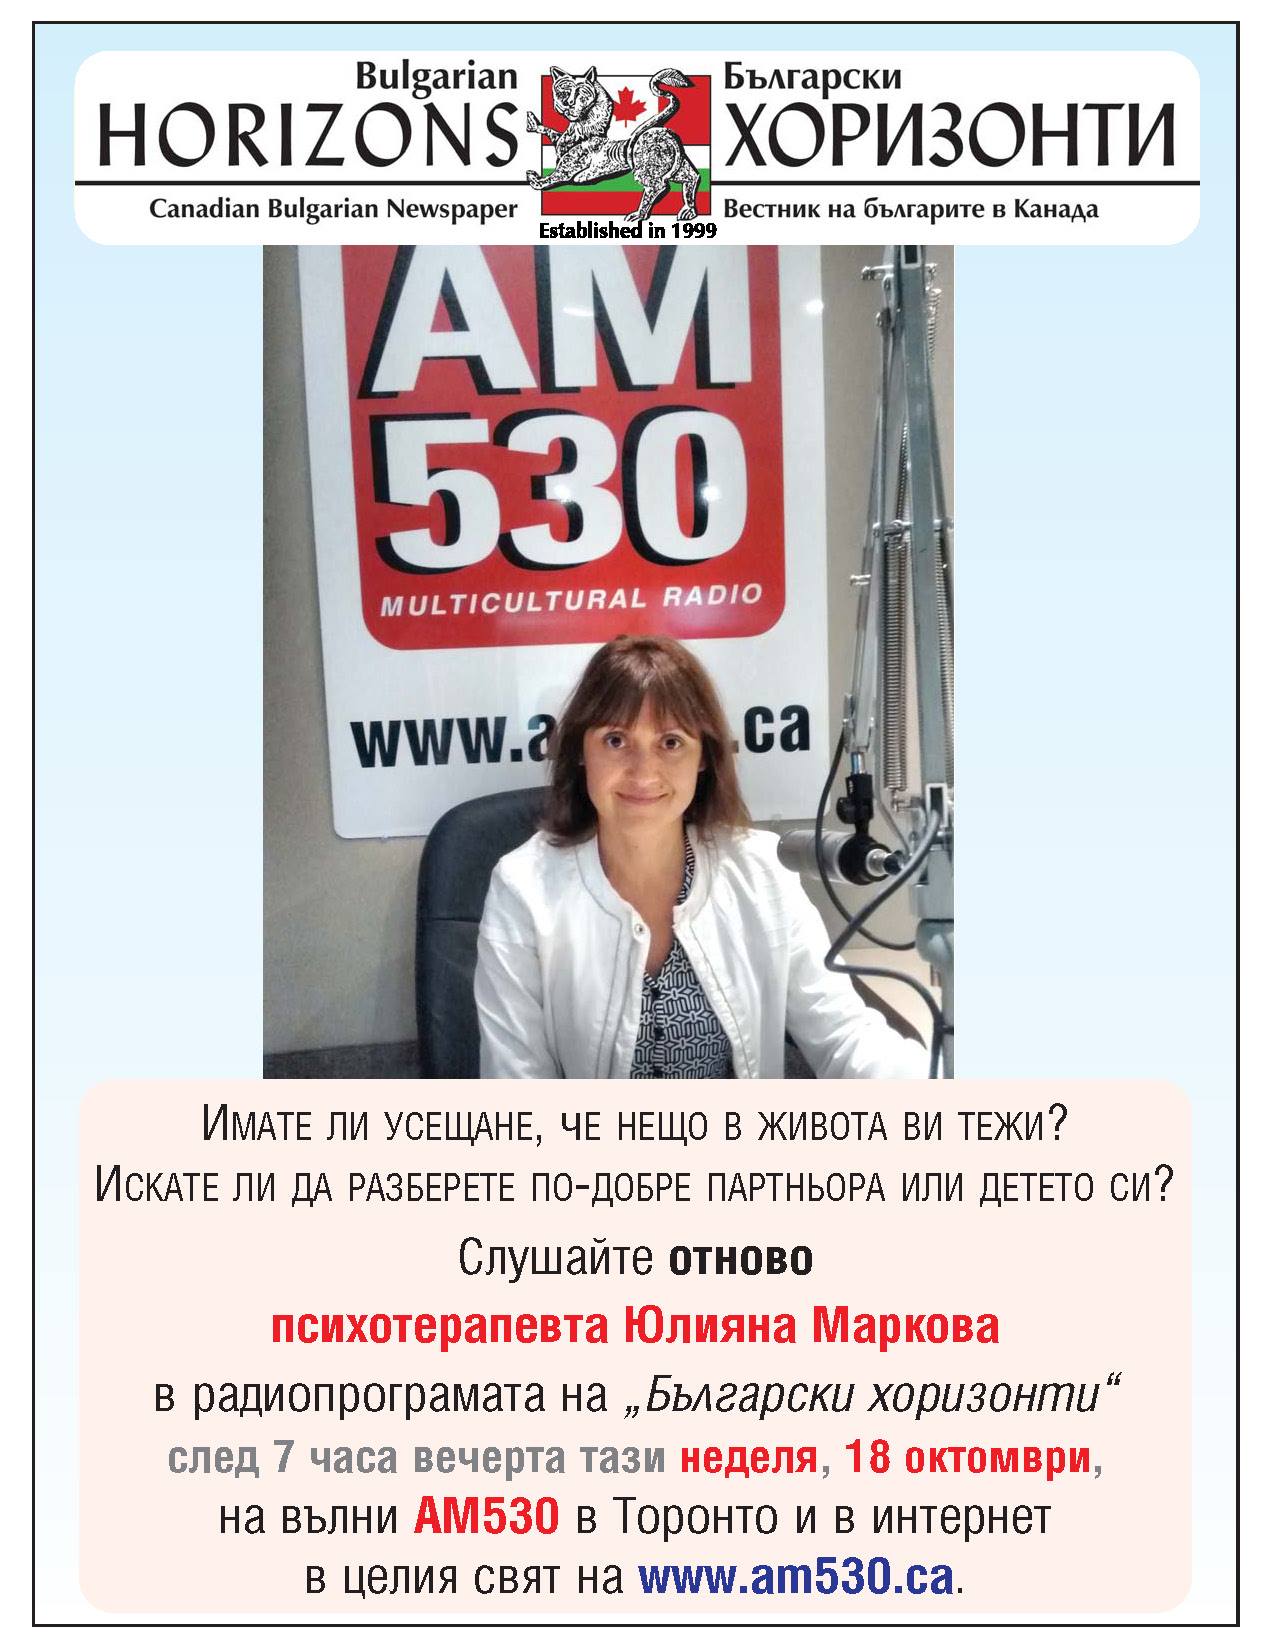 Uliyana Markova on radio with Bulgarian Horizons